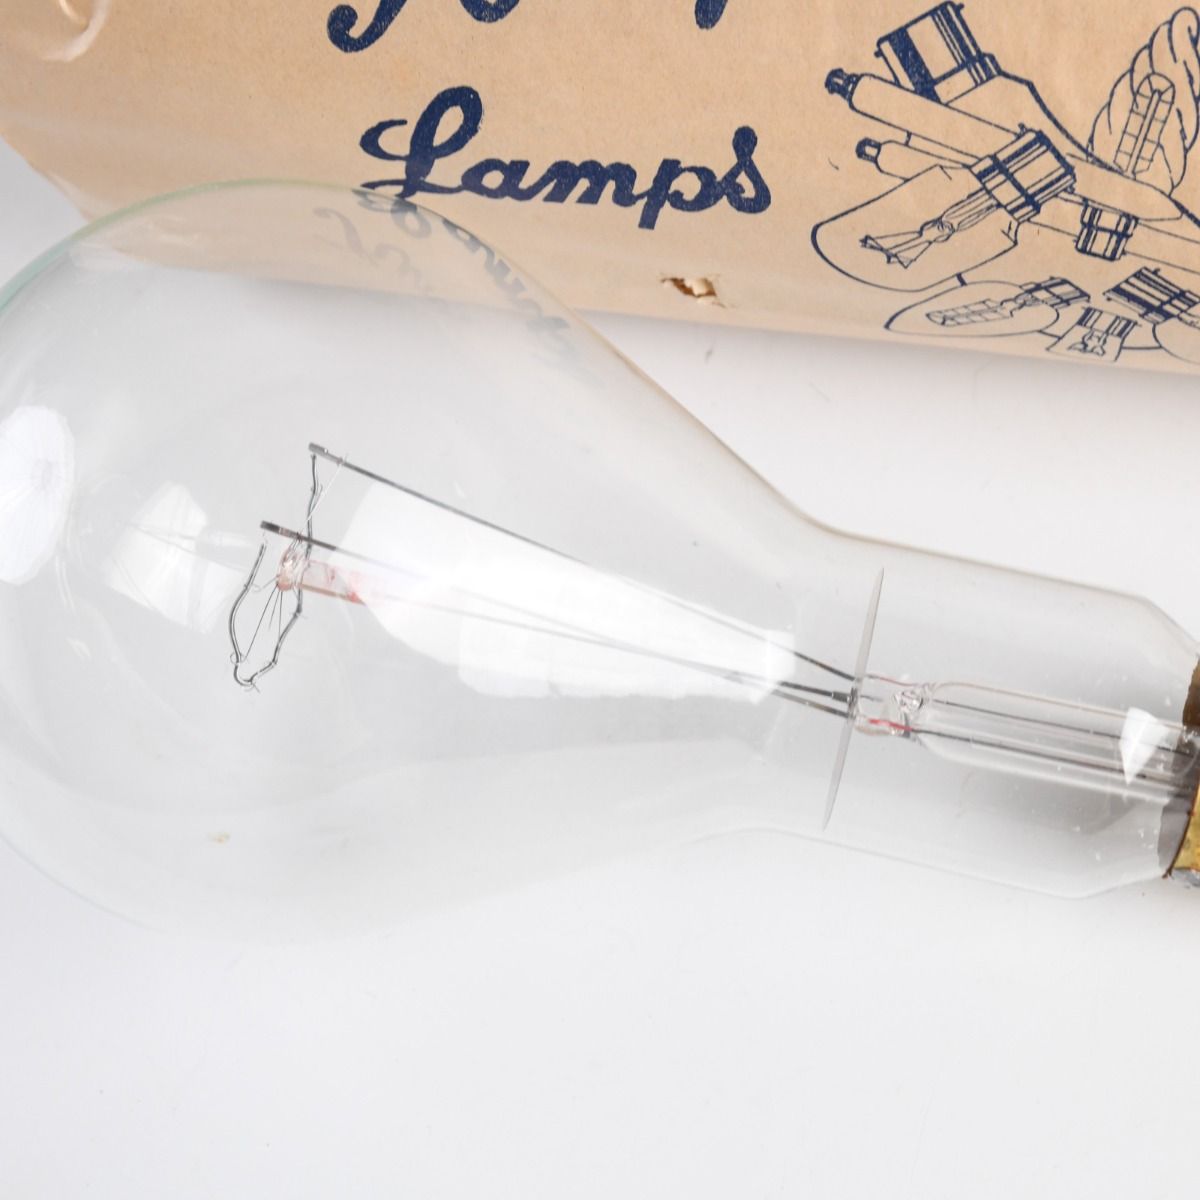 Vintage Kingston Lamps Incandescent 500W Light Bulb